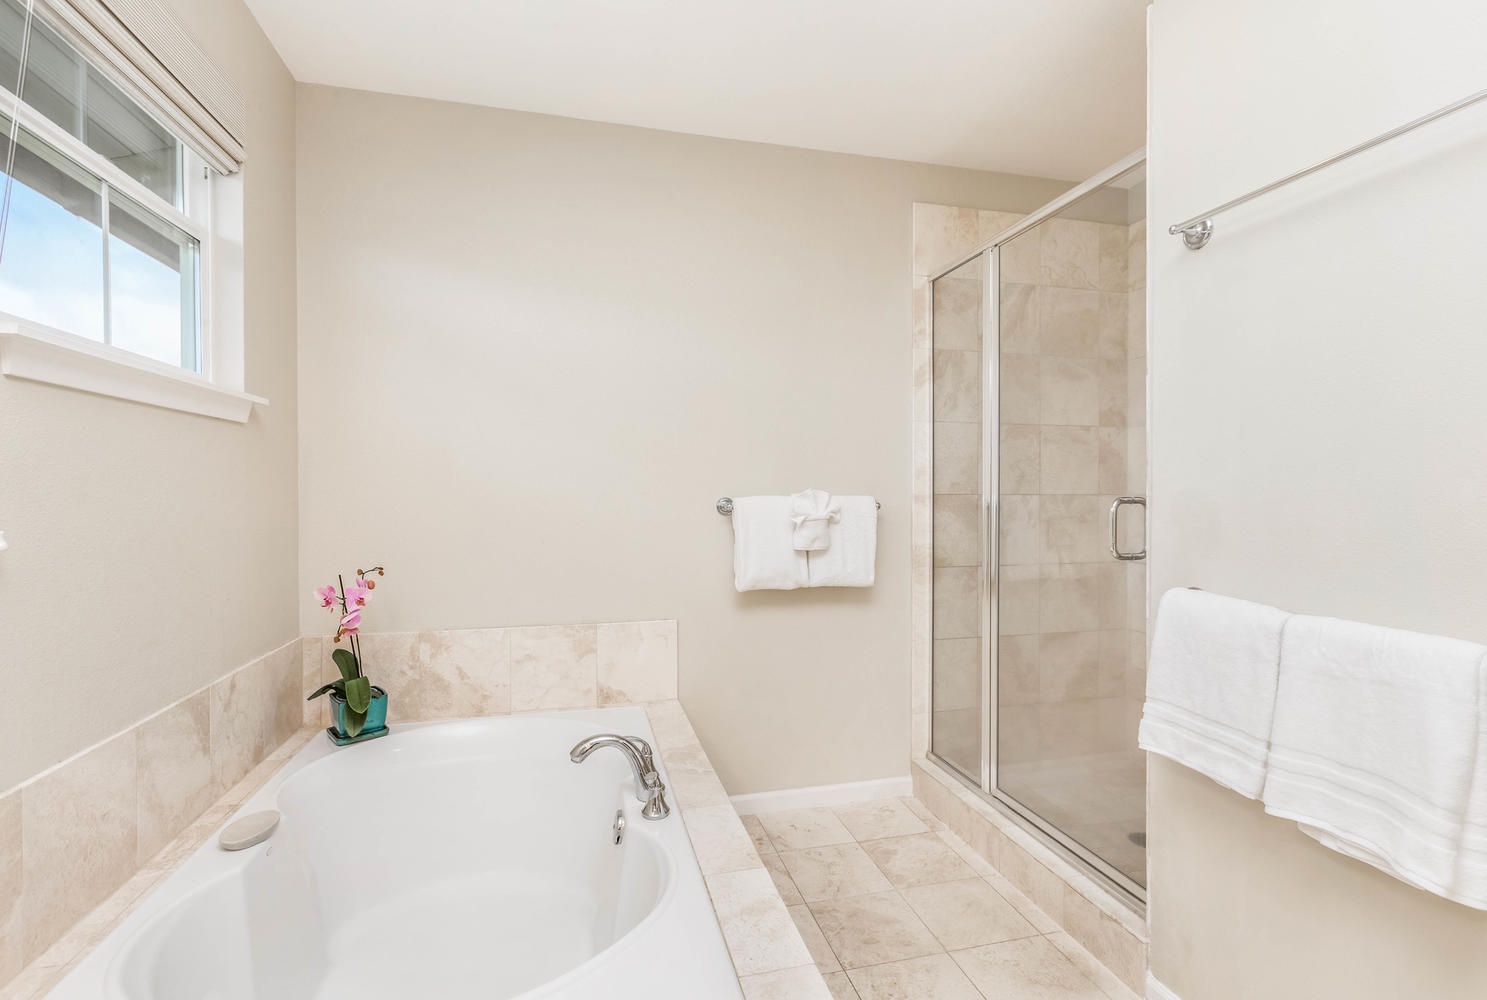 Princeville Vacation Rentals, Leilani Villa - Primary bathroom with tub and shower